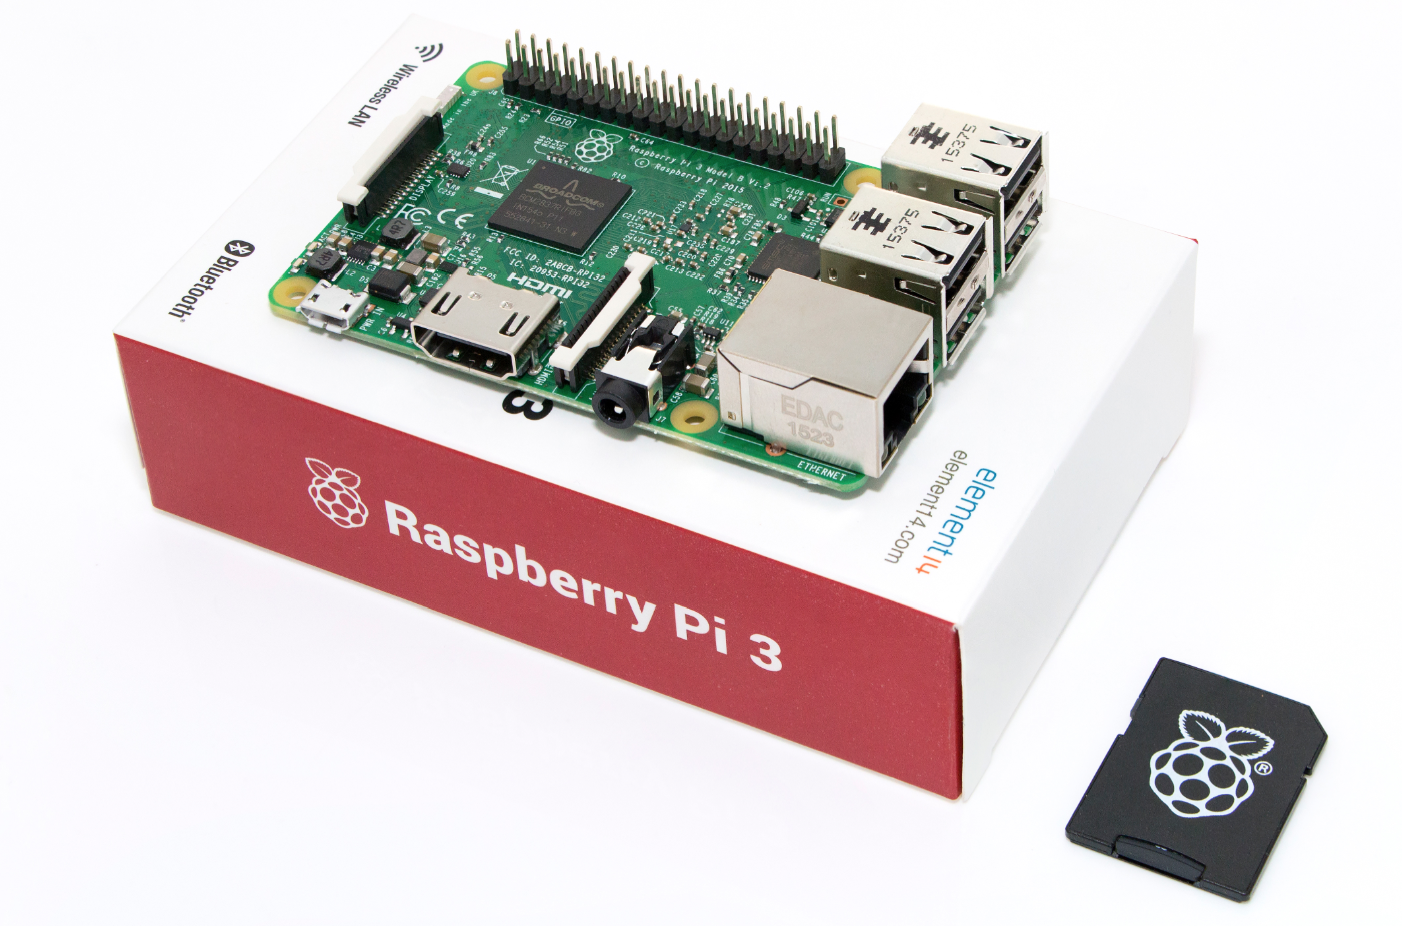 Raspberry Pi 3 Backs Wi-Fi, Bluetooth LE and More | Time